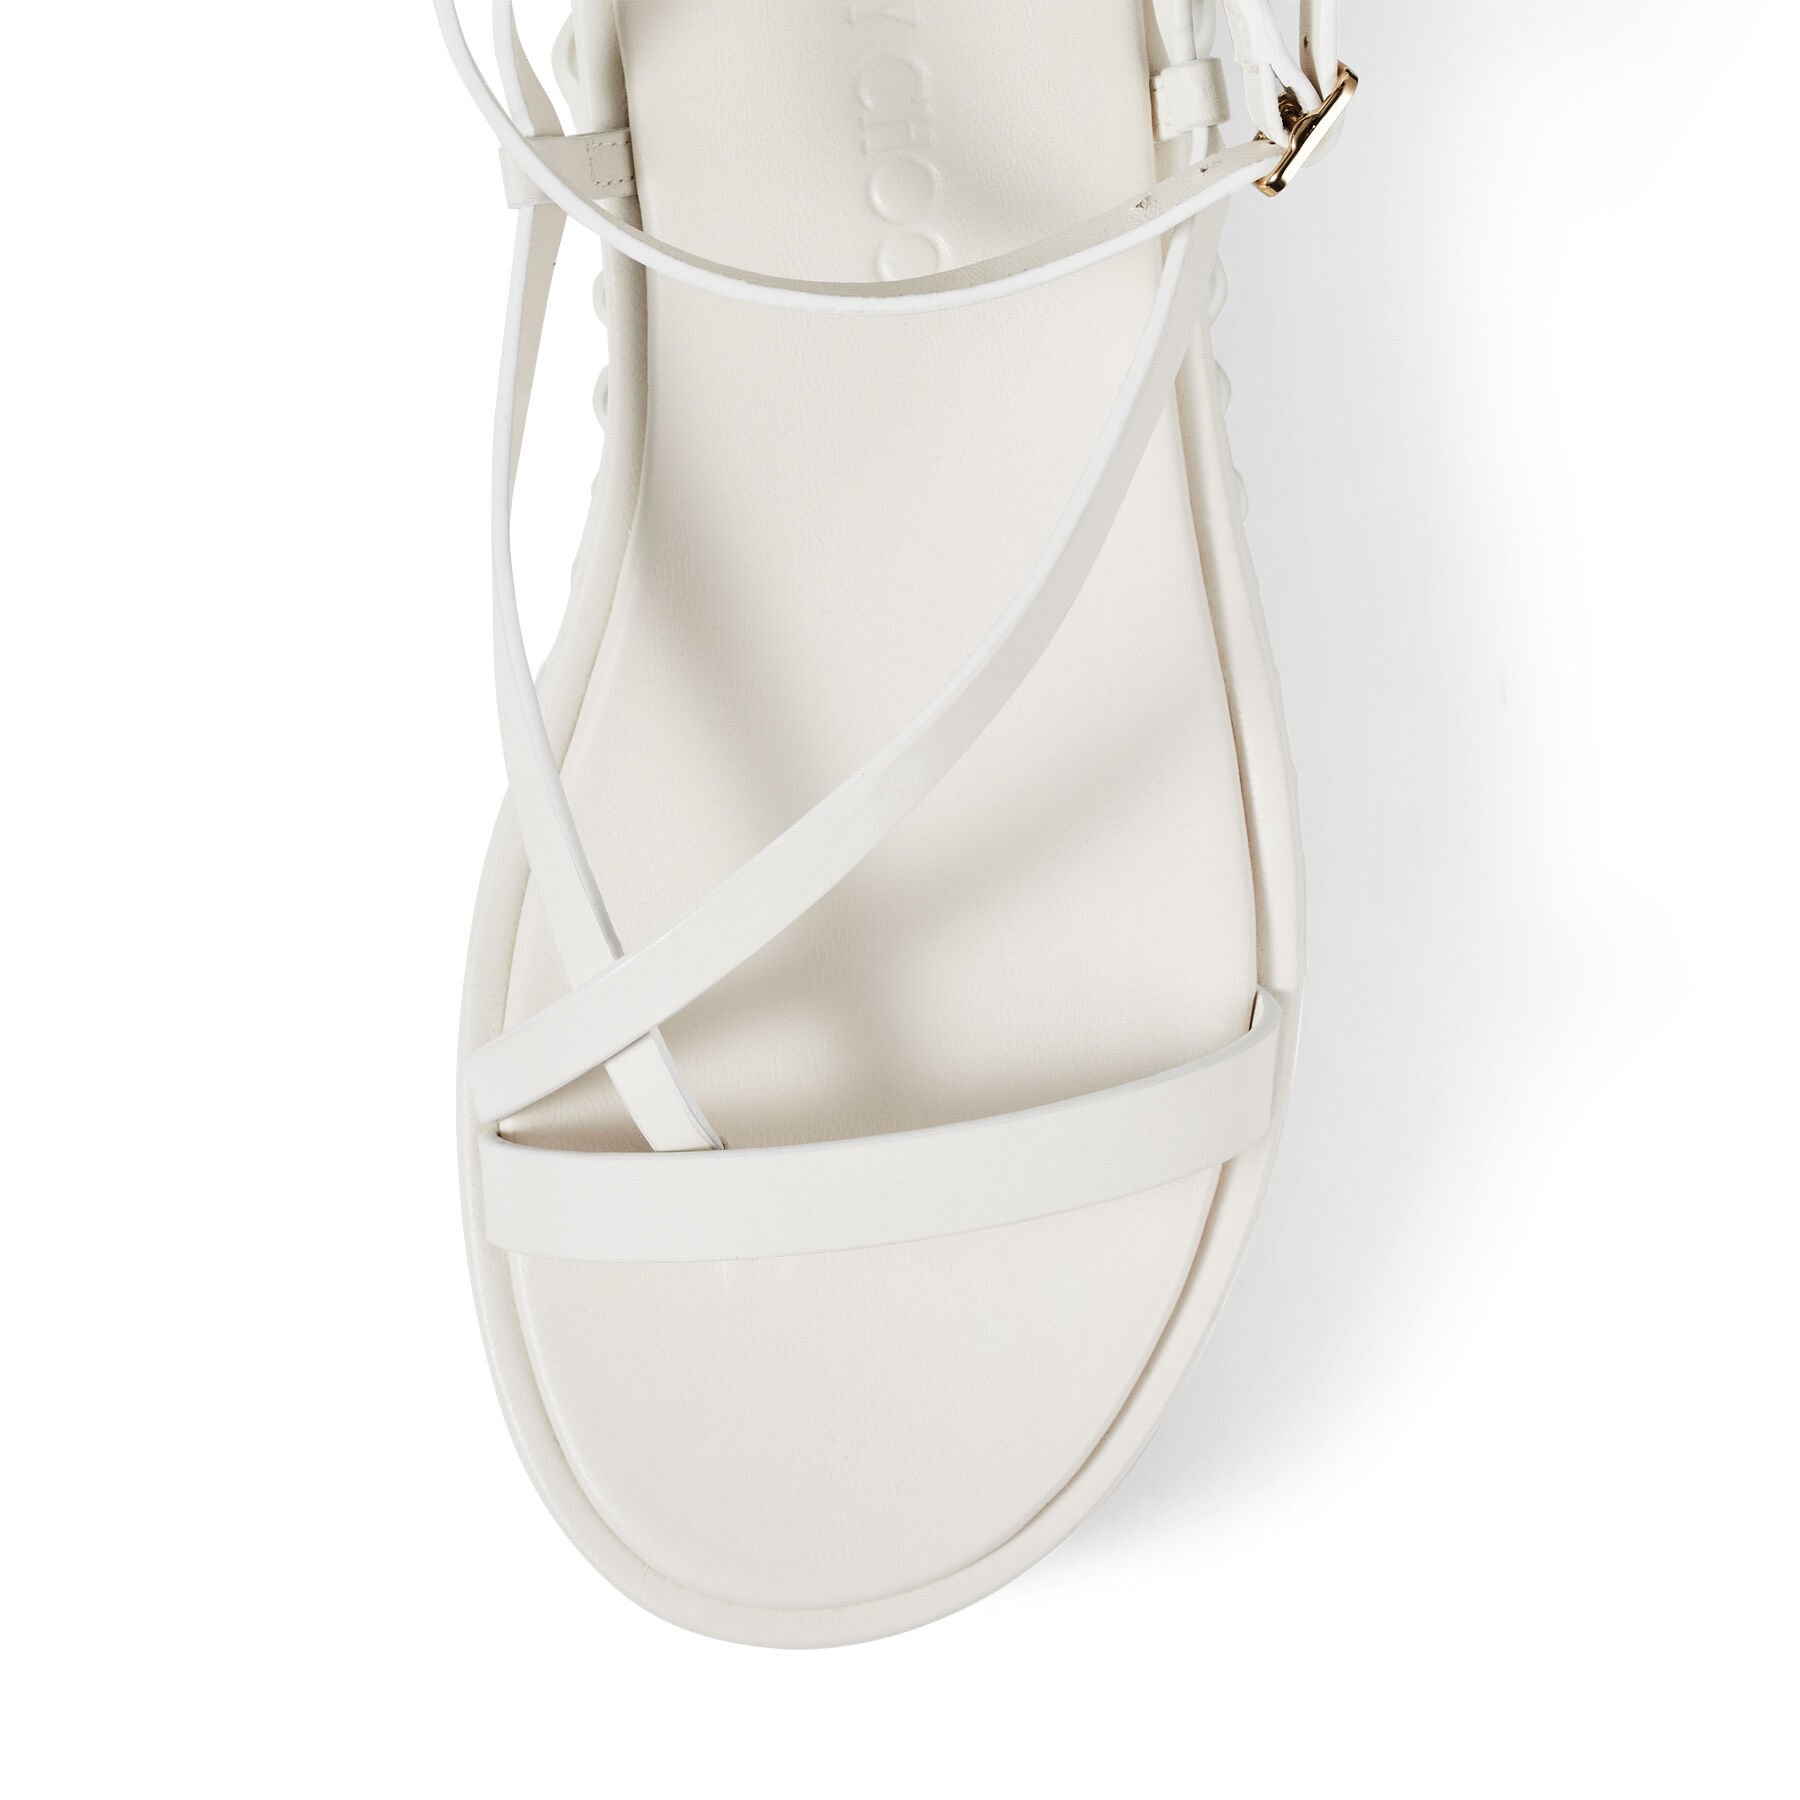 Latte Vachetta Leather Platform Sandals with Pearl Embellishment 